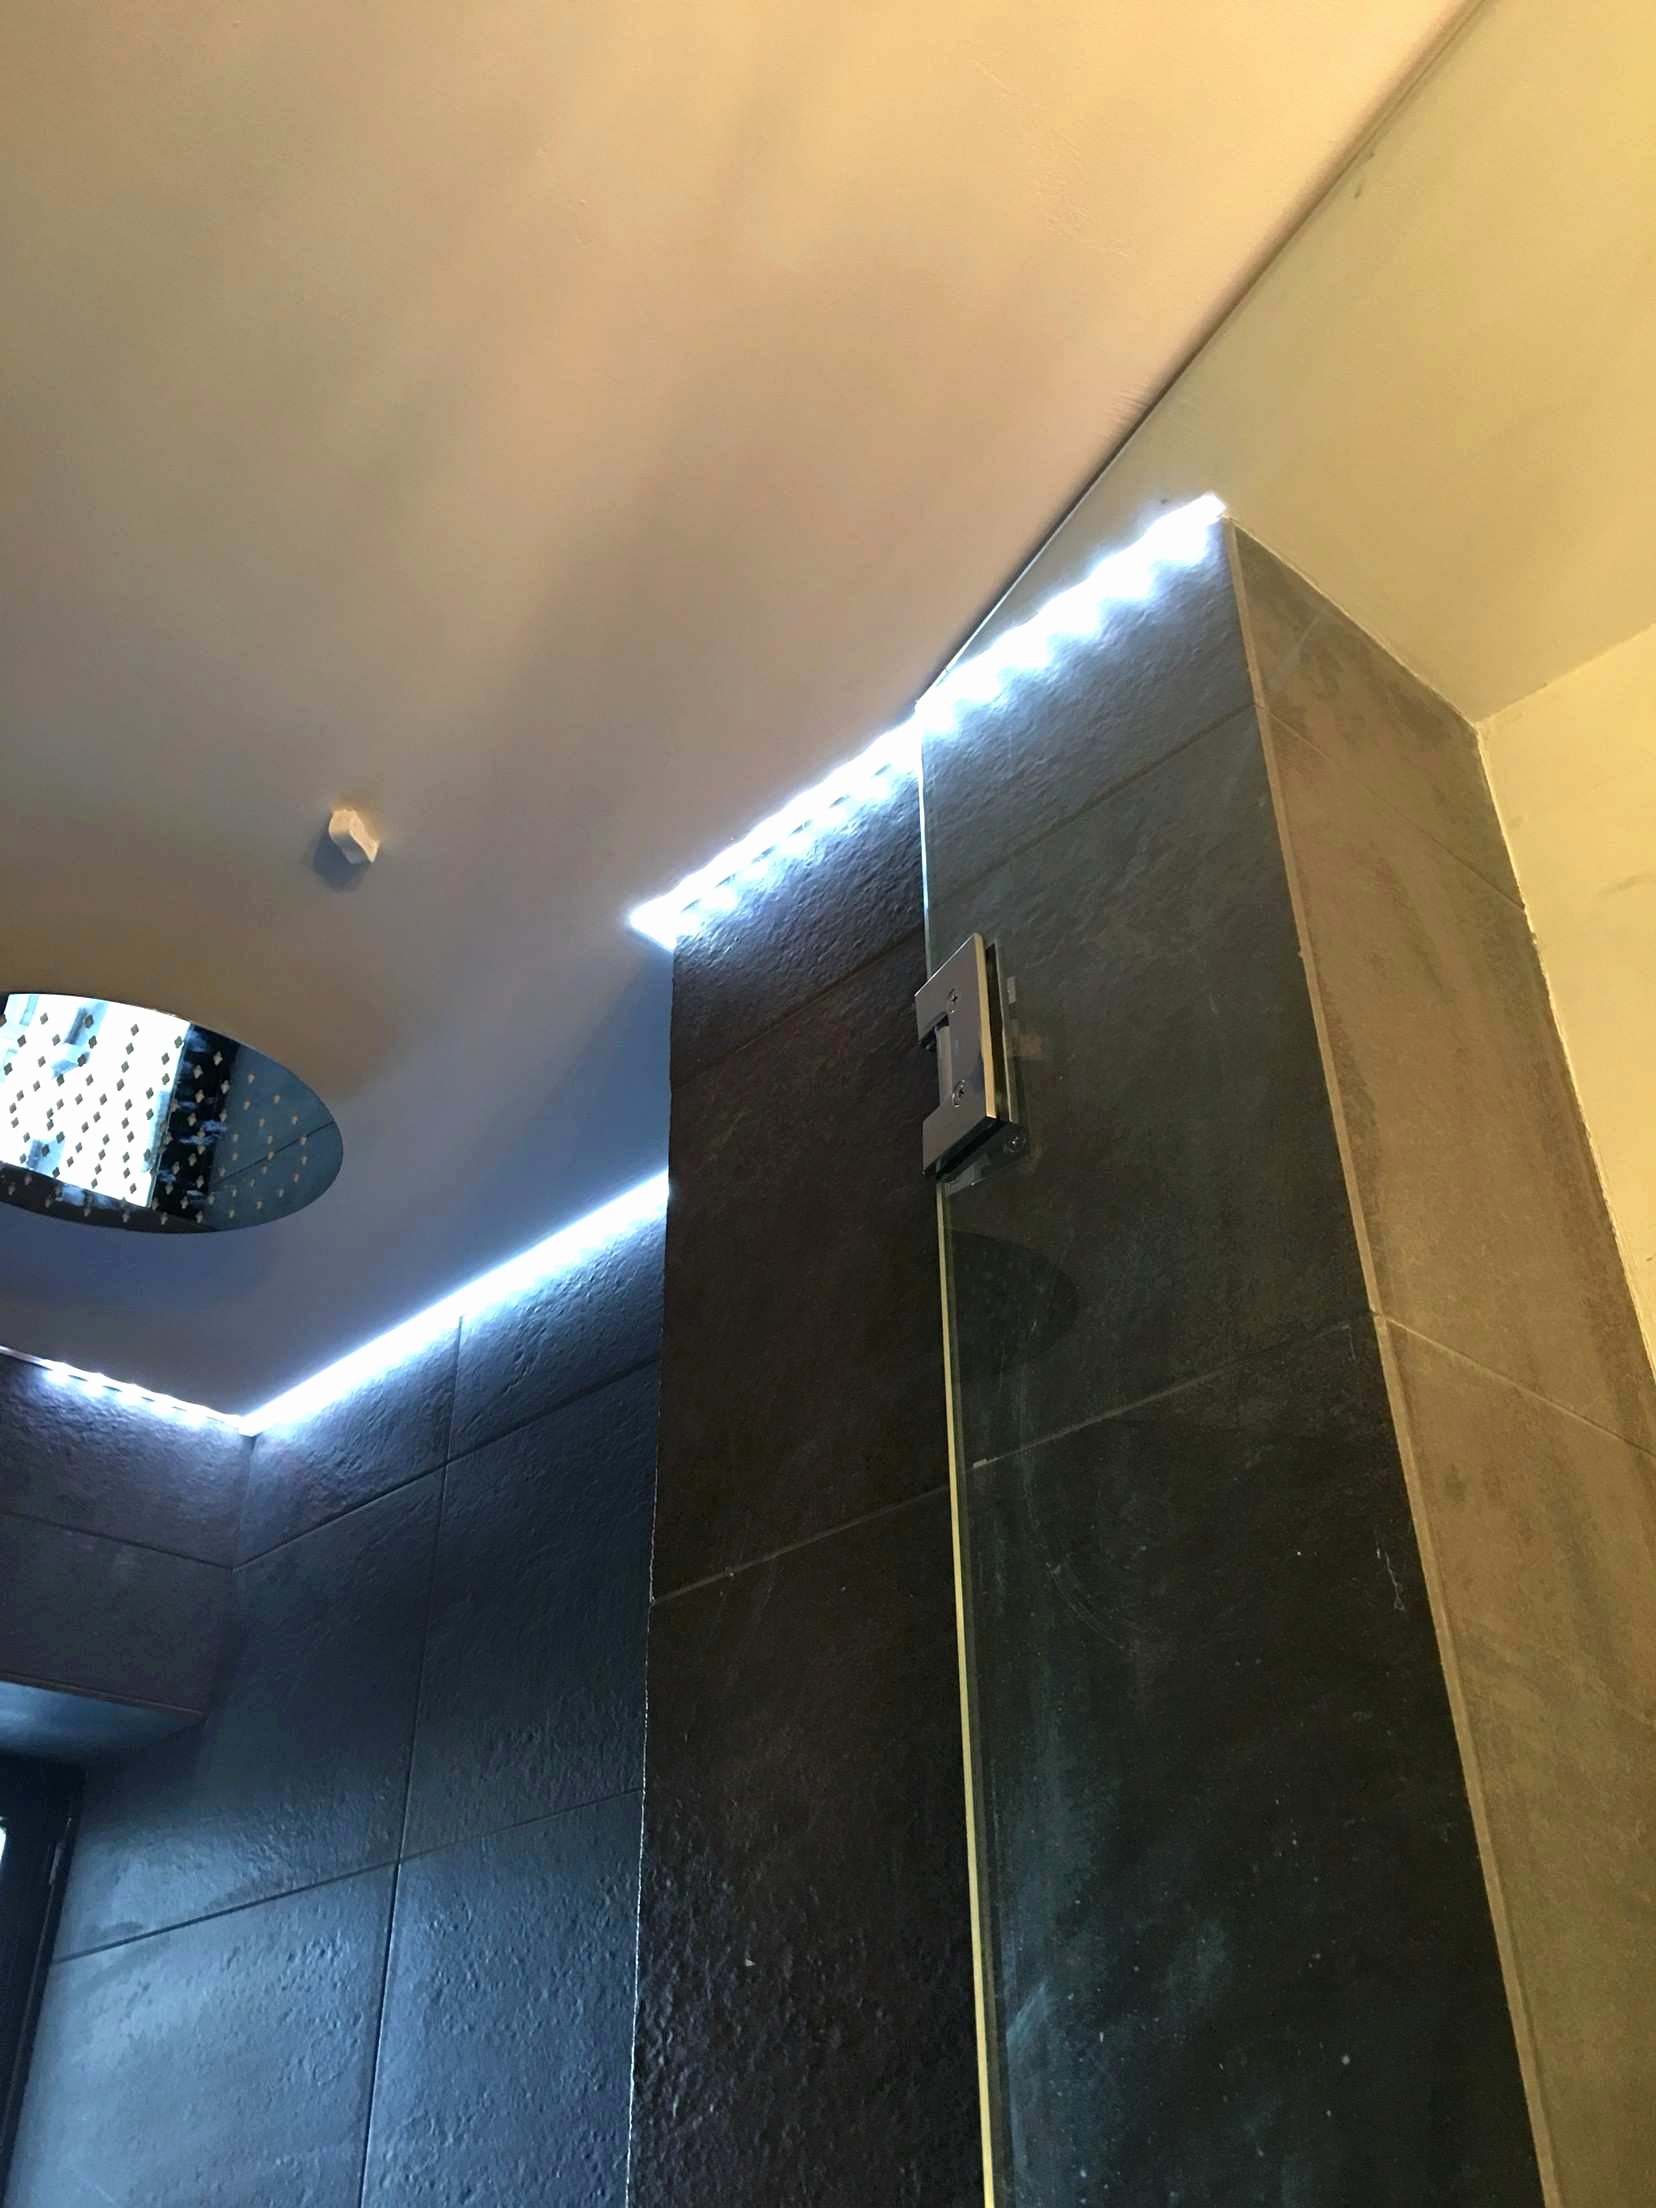 Suspended Ceiling Lights Lovely Bathroom Shower Light New H Sink Install Bathroom I 0d Exciting Diy